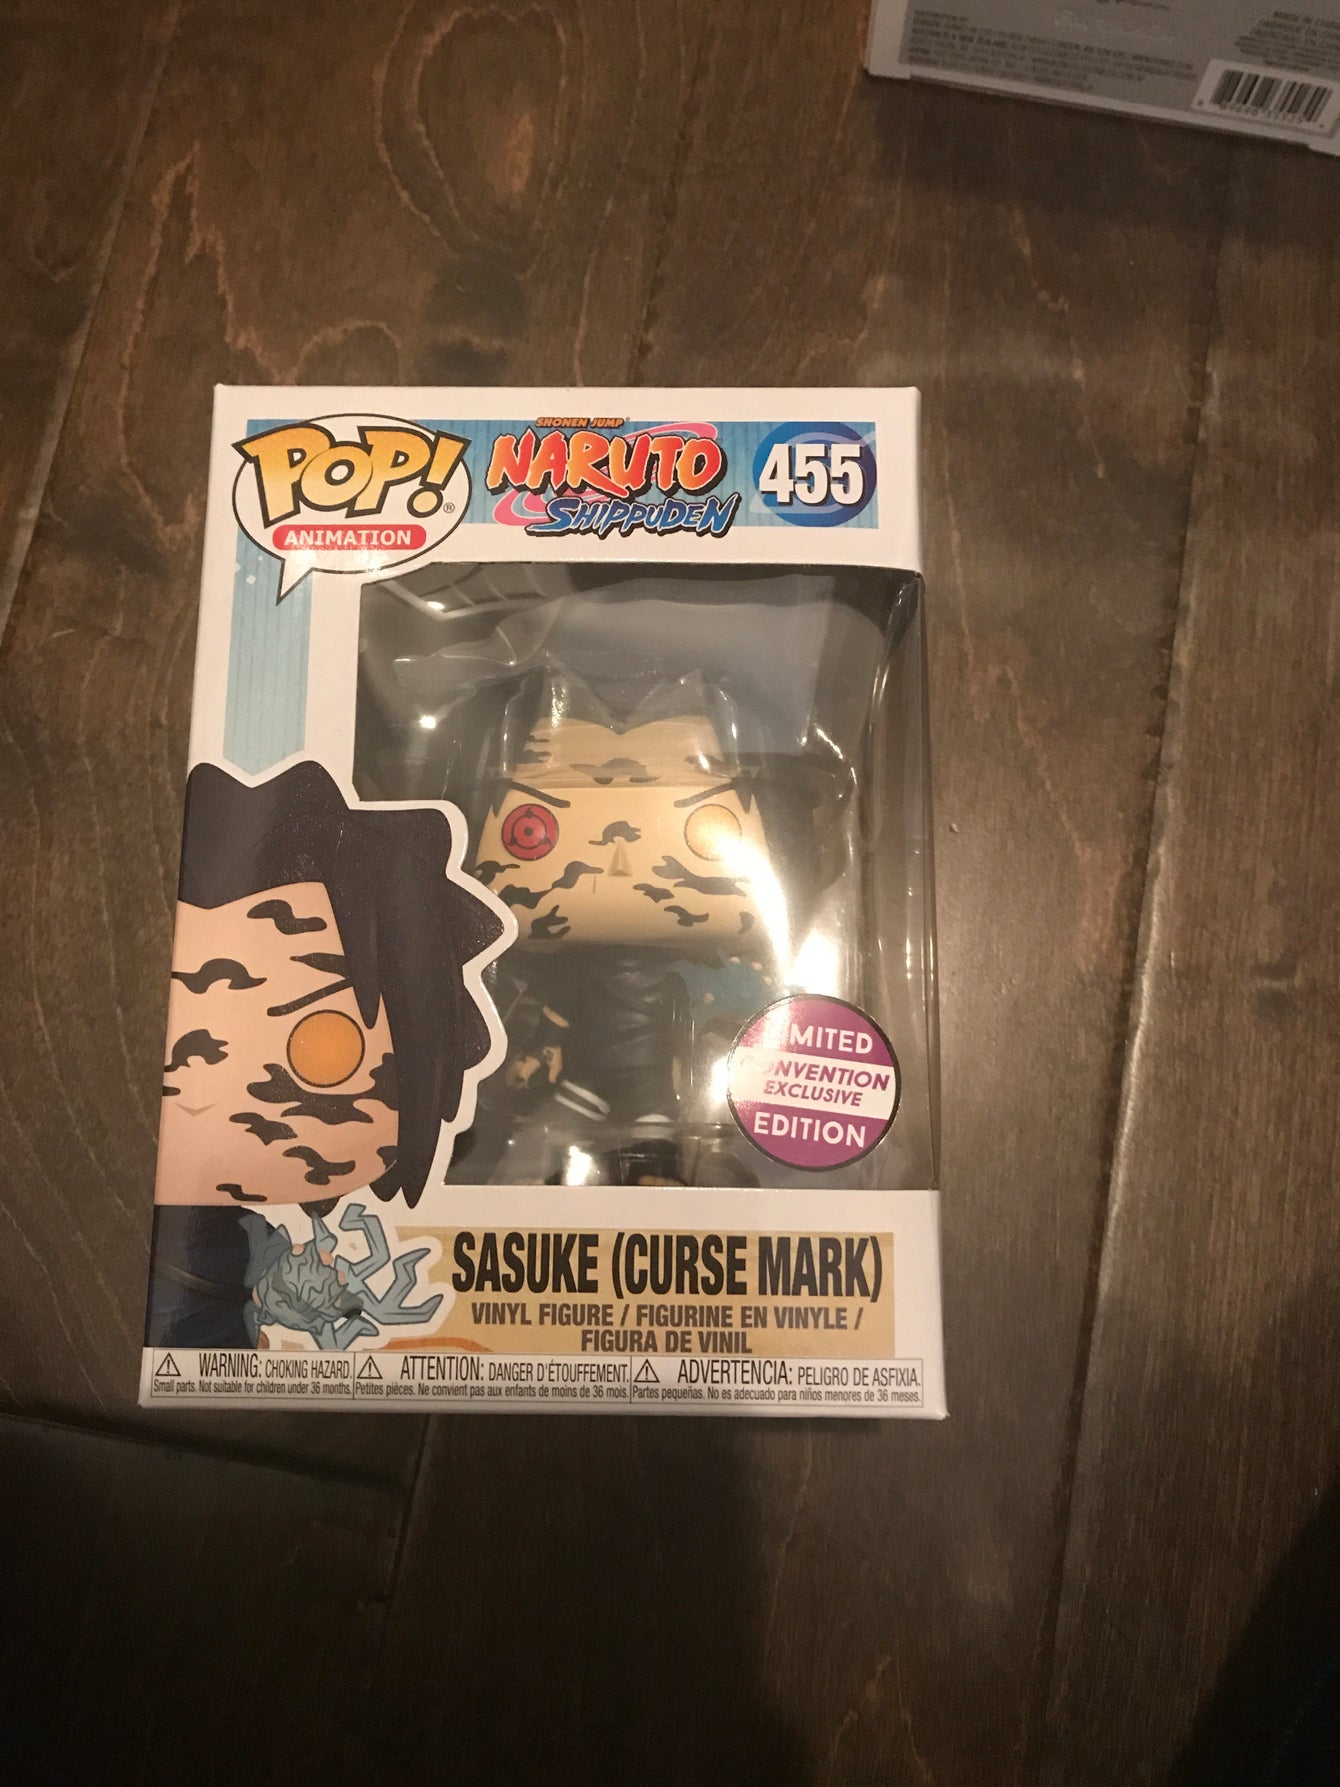 Sasuke (Curse Mark) mint condition LC3